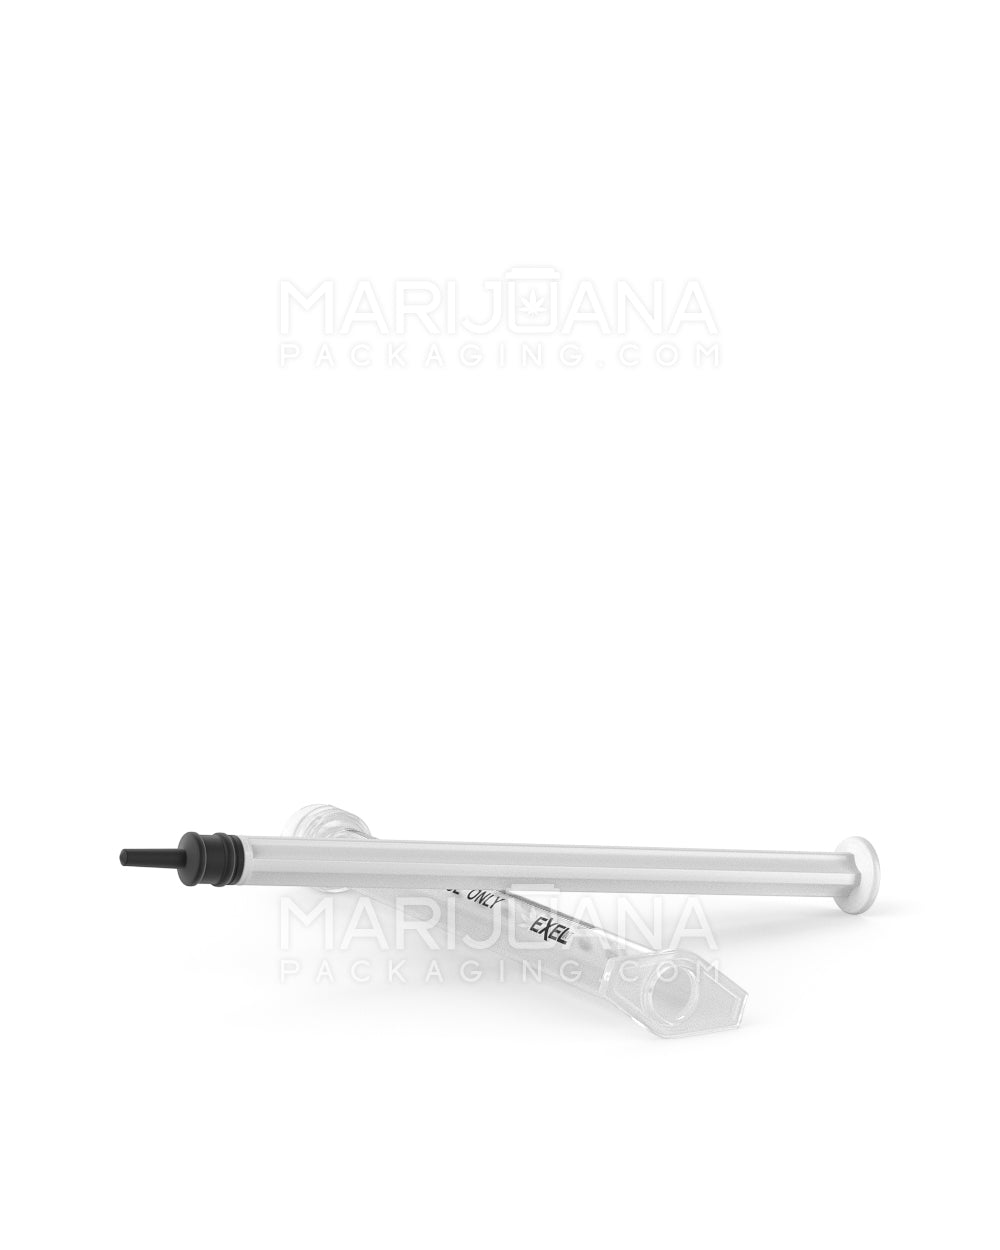 Luer Lock | Plastic Dab Applicator Syringes | 1mL - 0.1mL Increments - 100 Count - 5